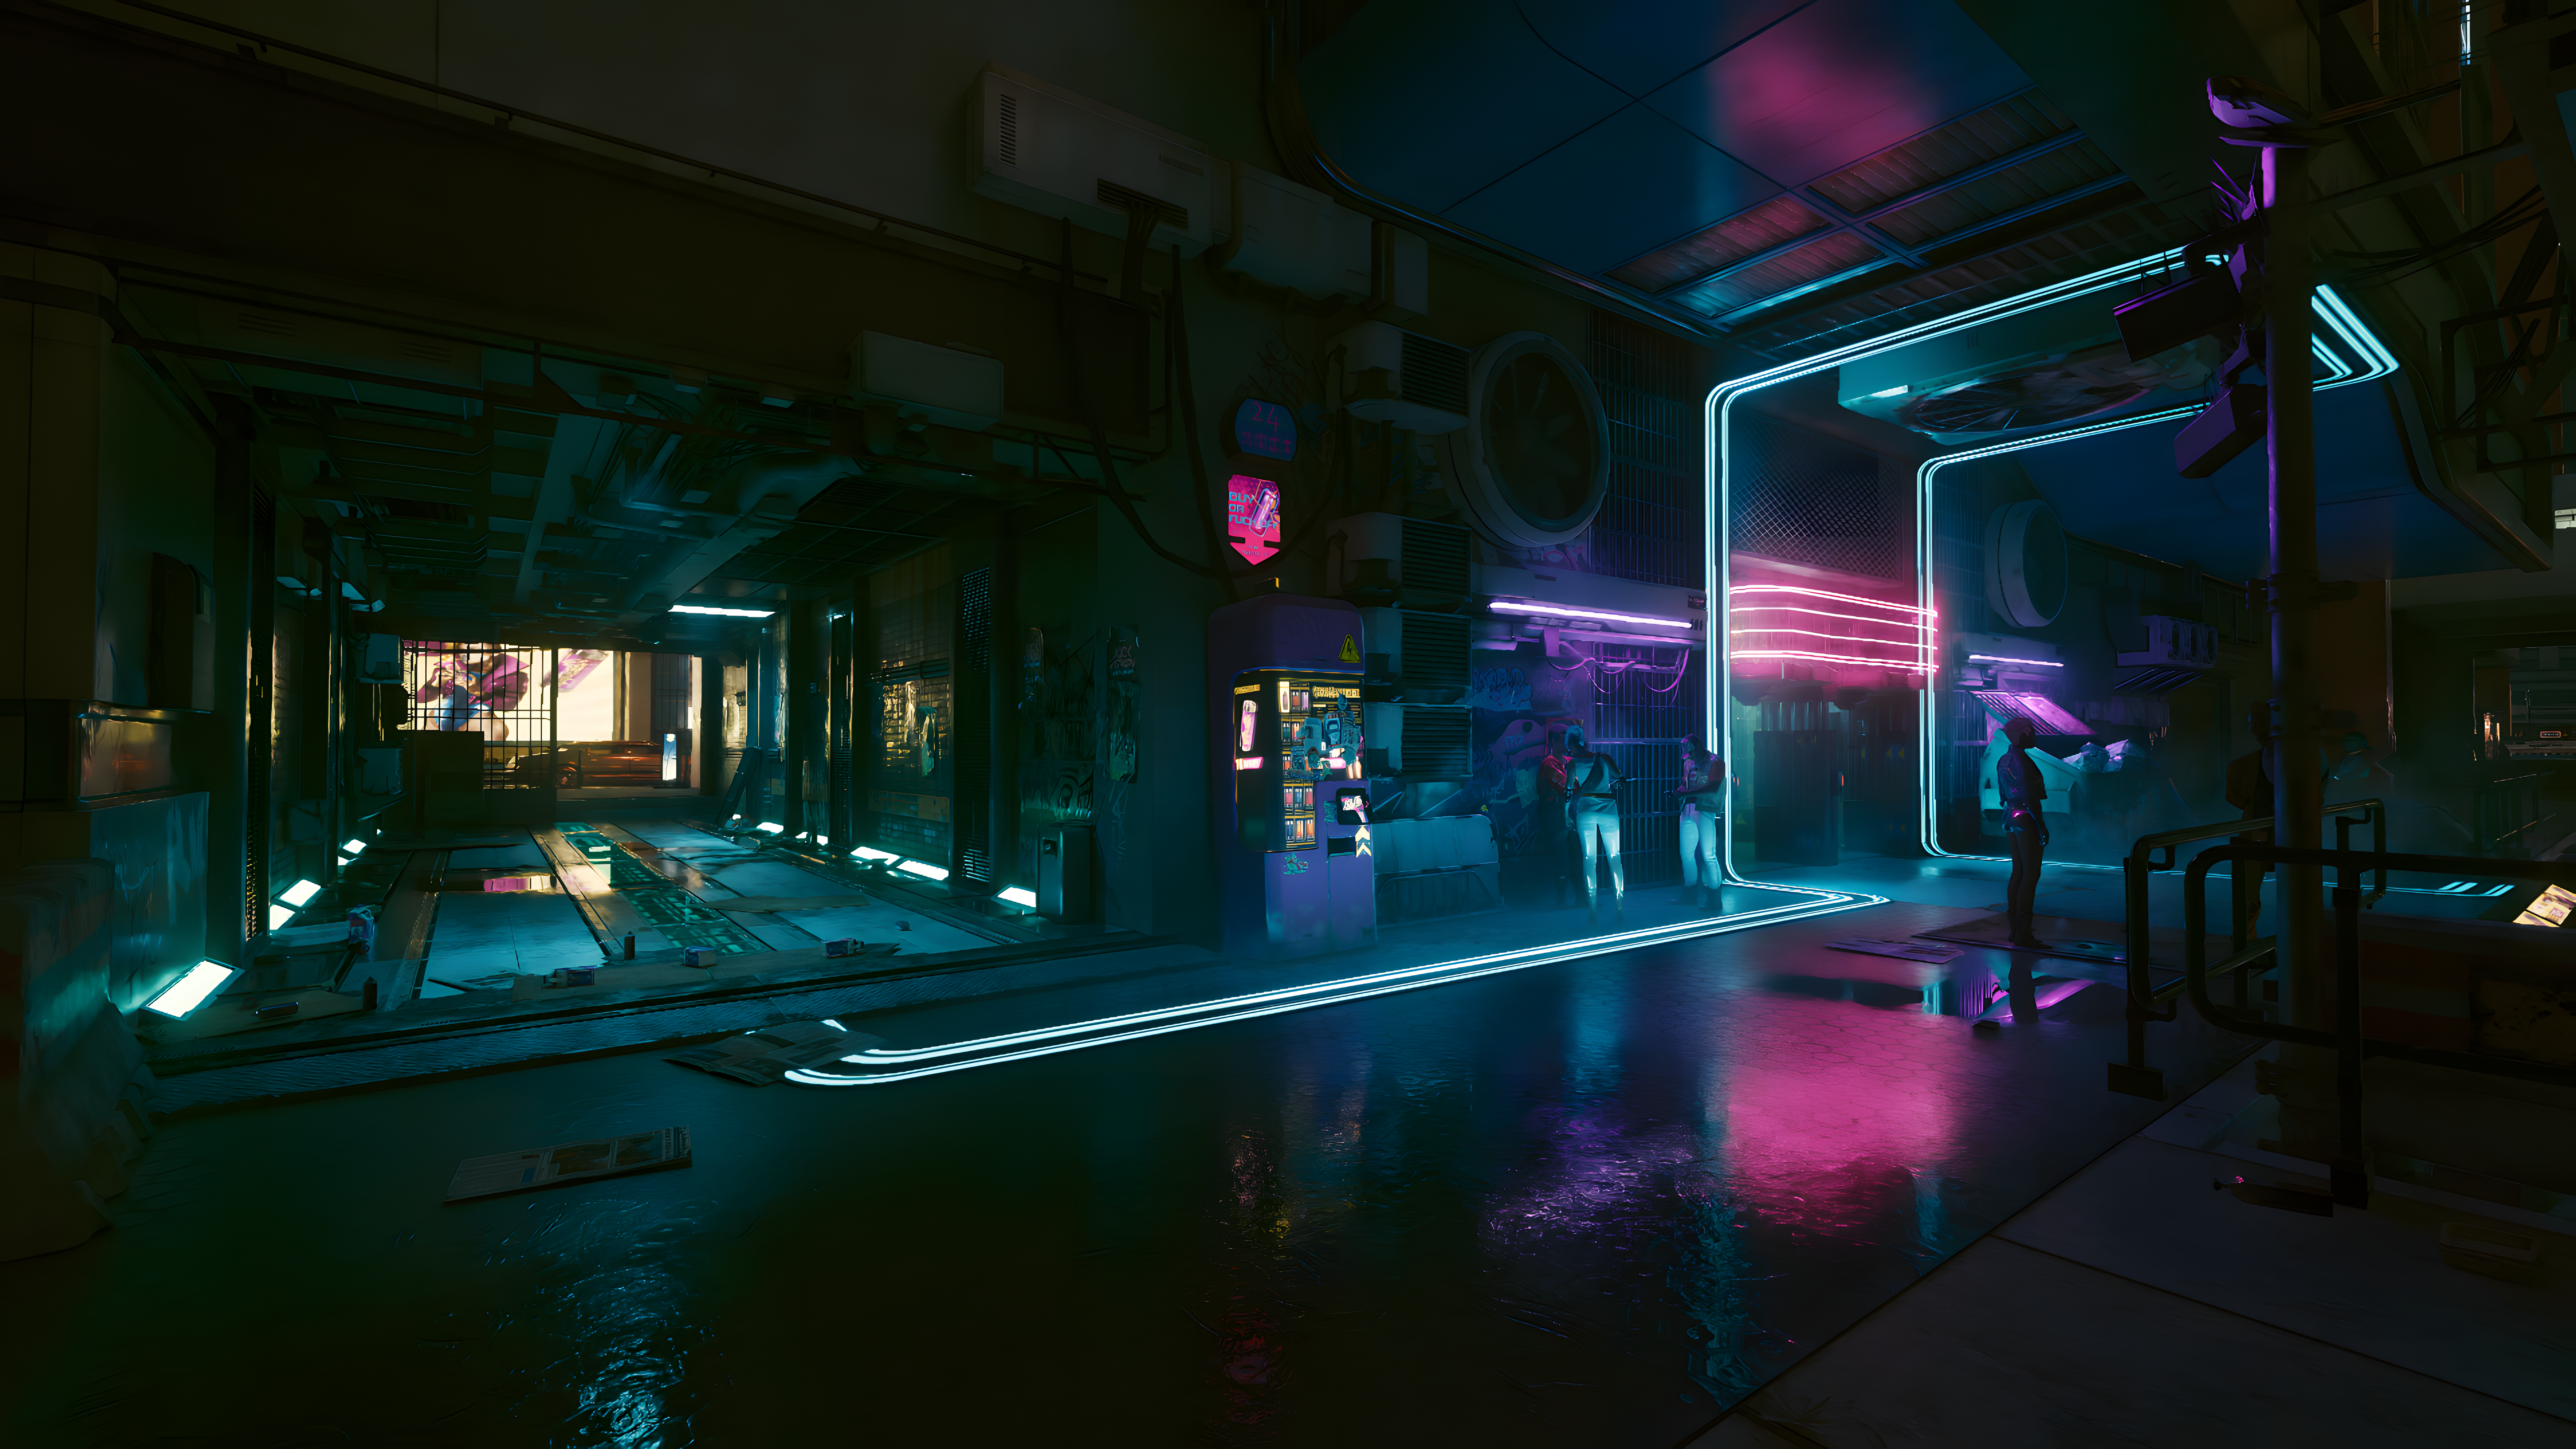 Futuristic cyberpunk cityscape scene inspired by Cyberpunk 2077, perfect as an HD desktop wallpaper.